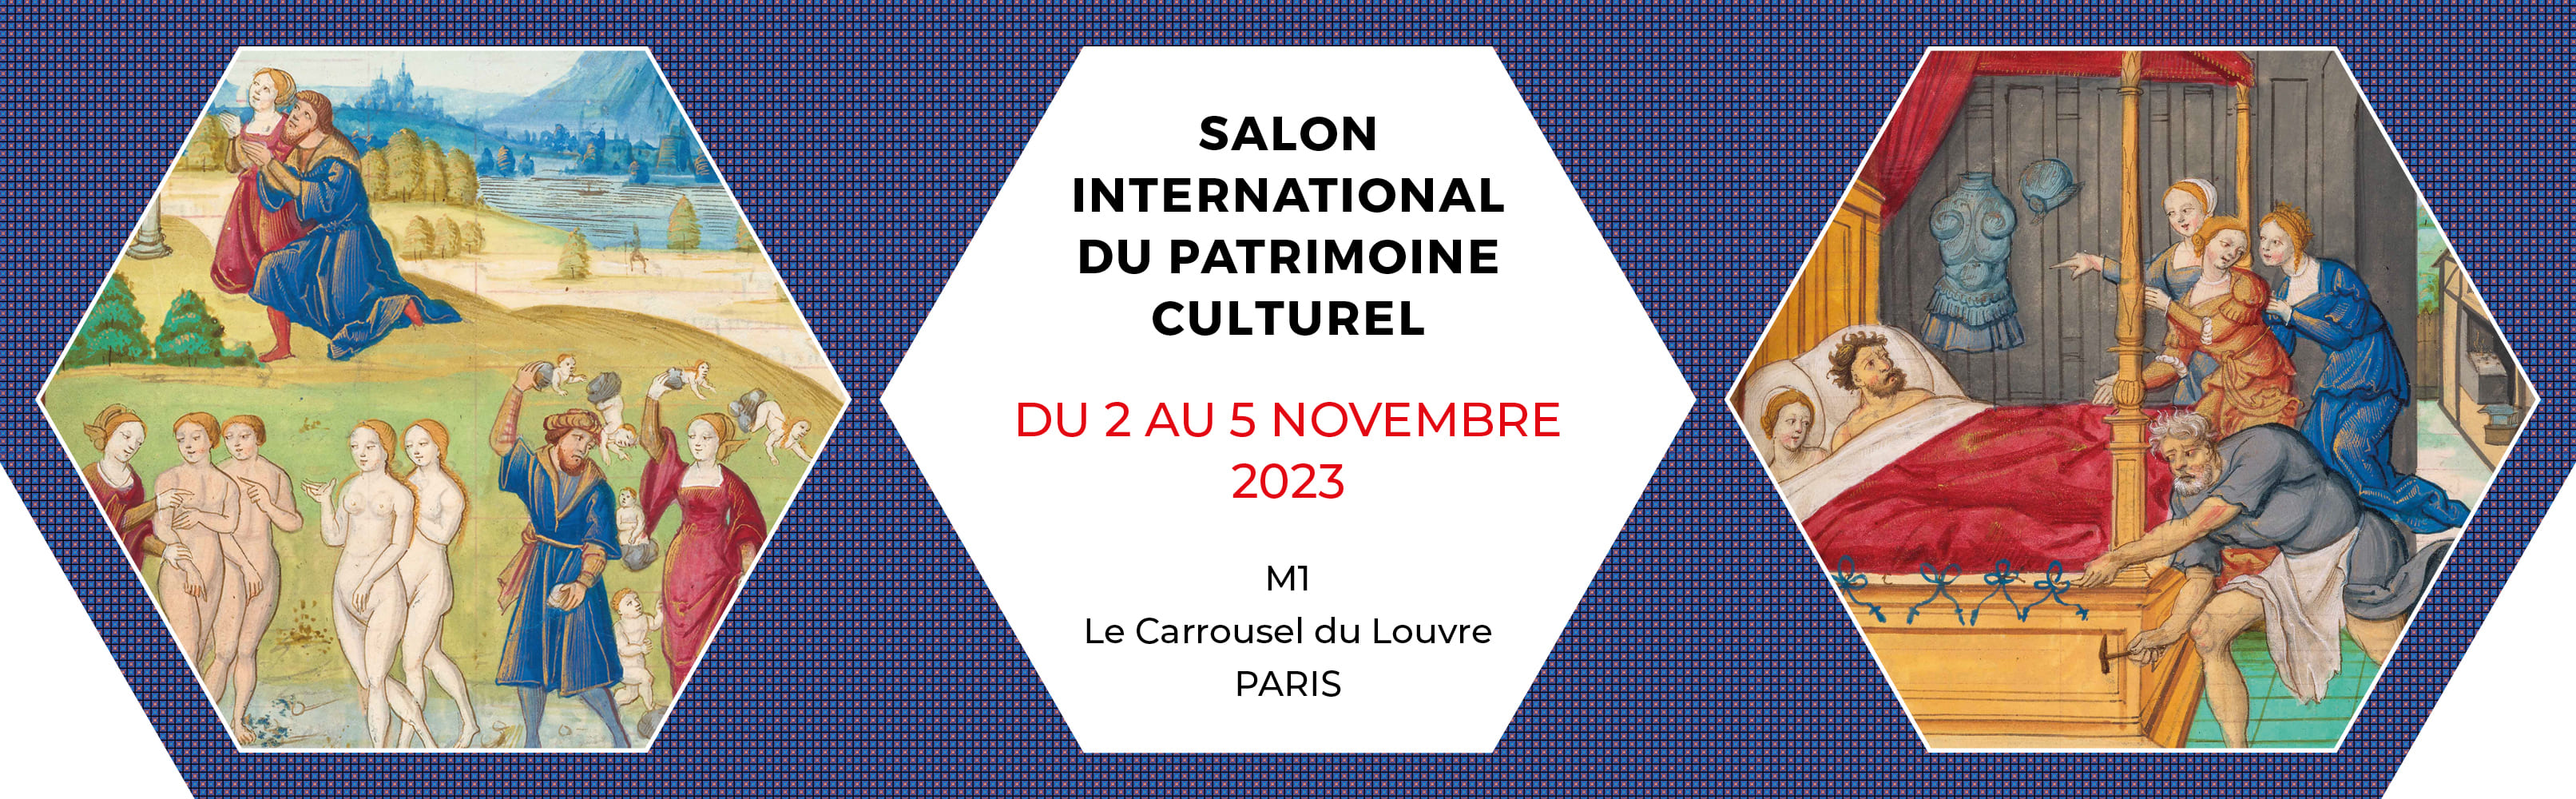 Salon International du Patrimoine Culturel del 2 al 5 de noviembre.